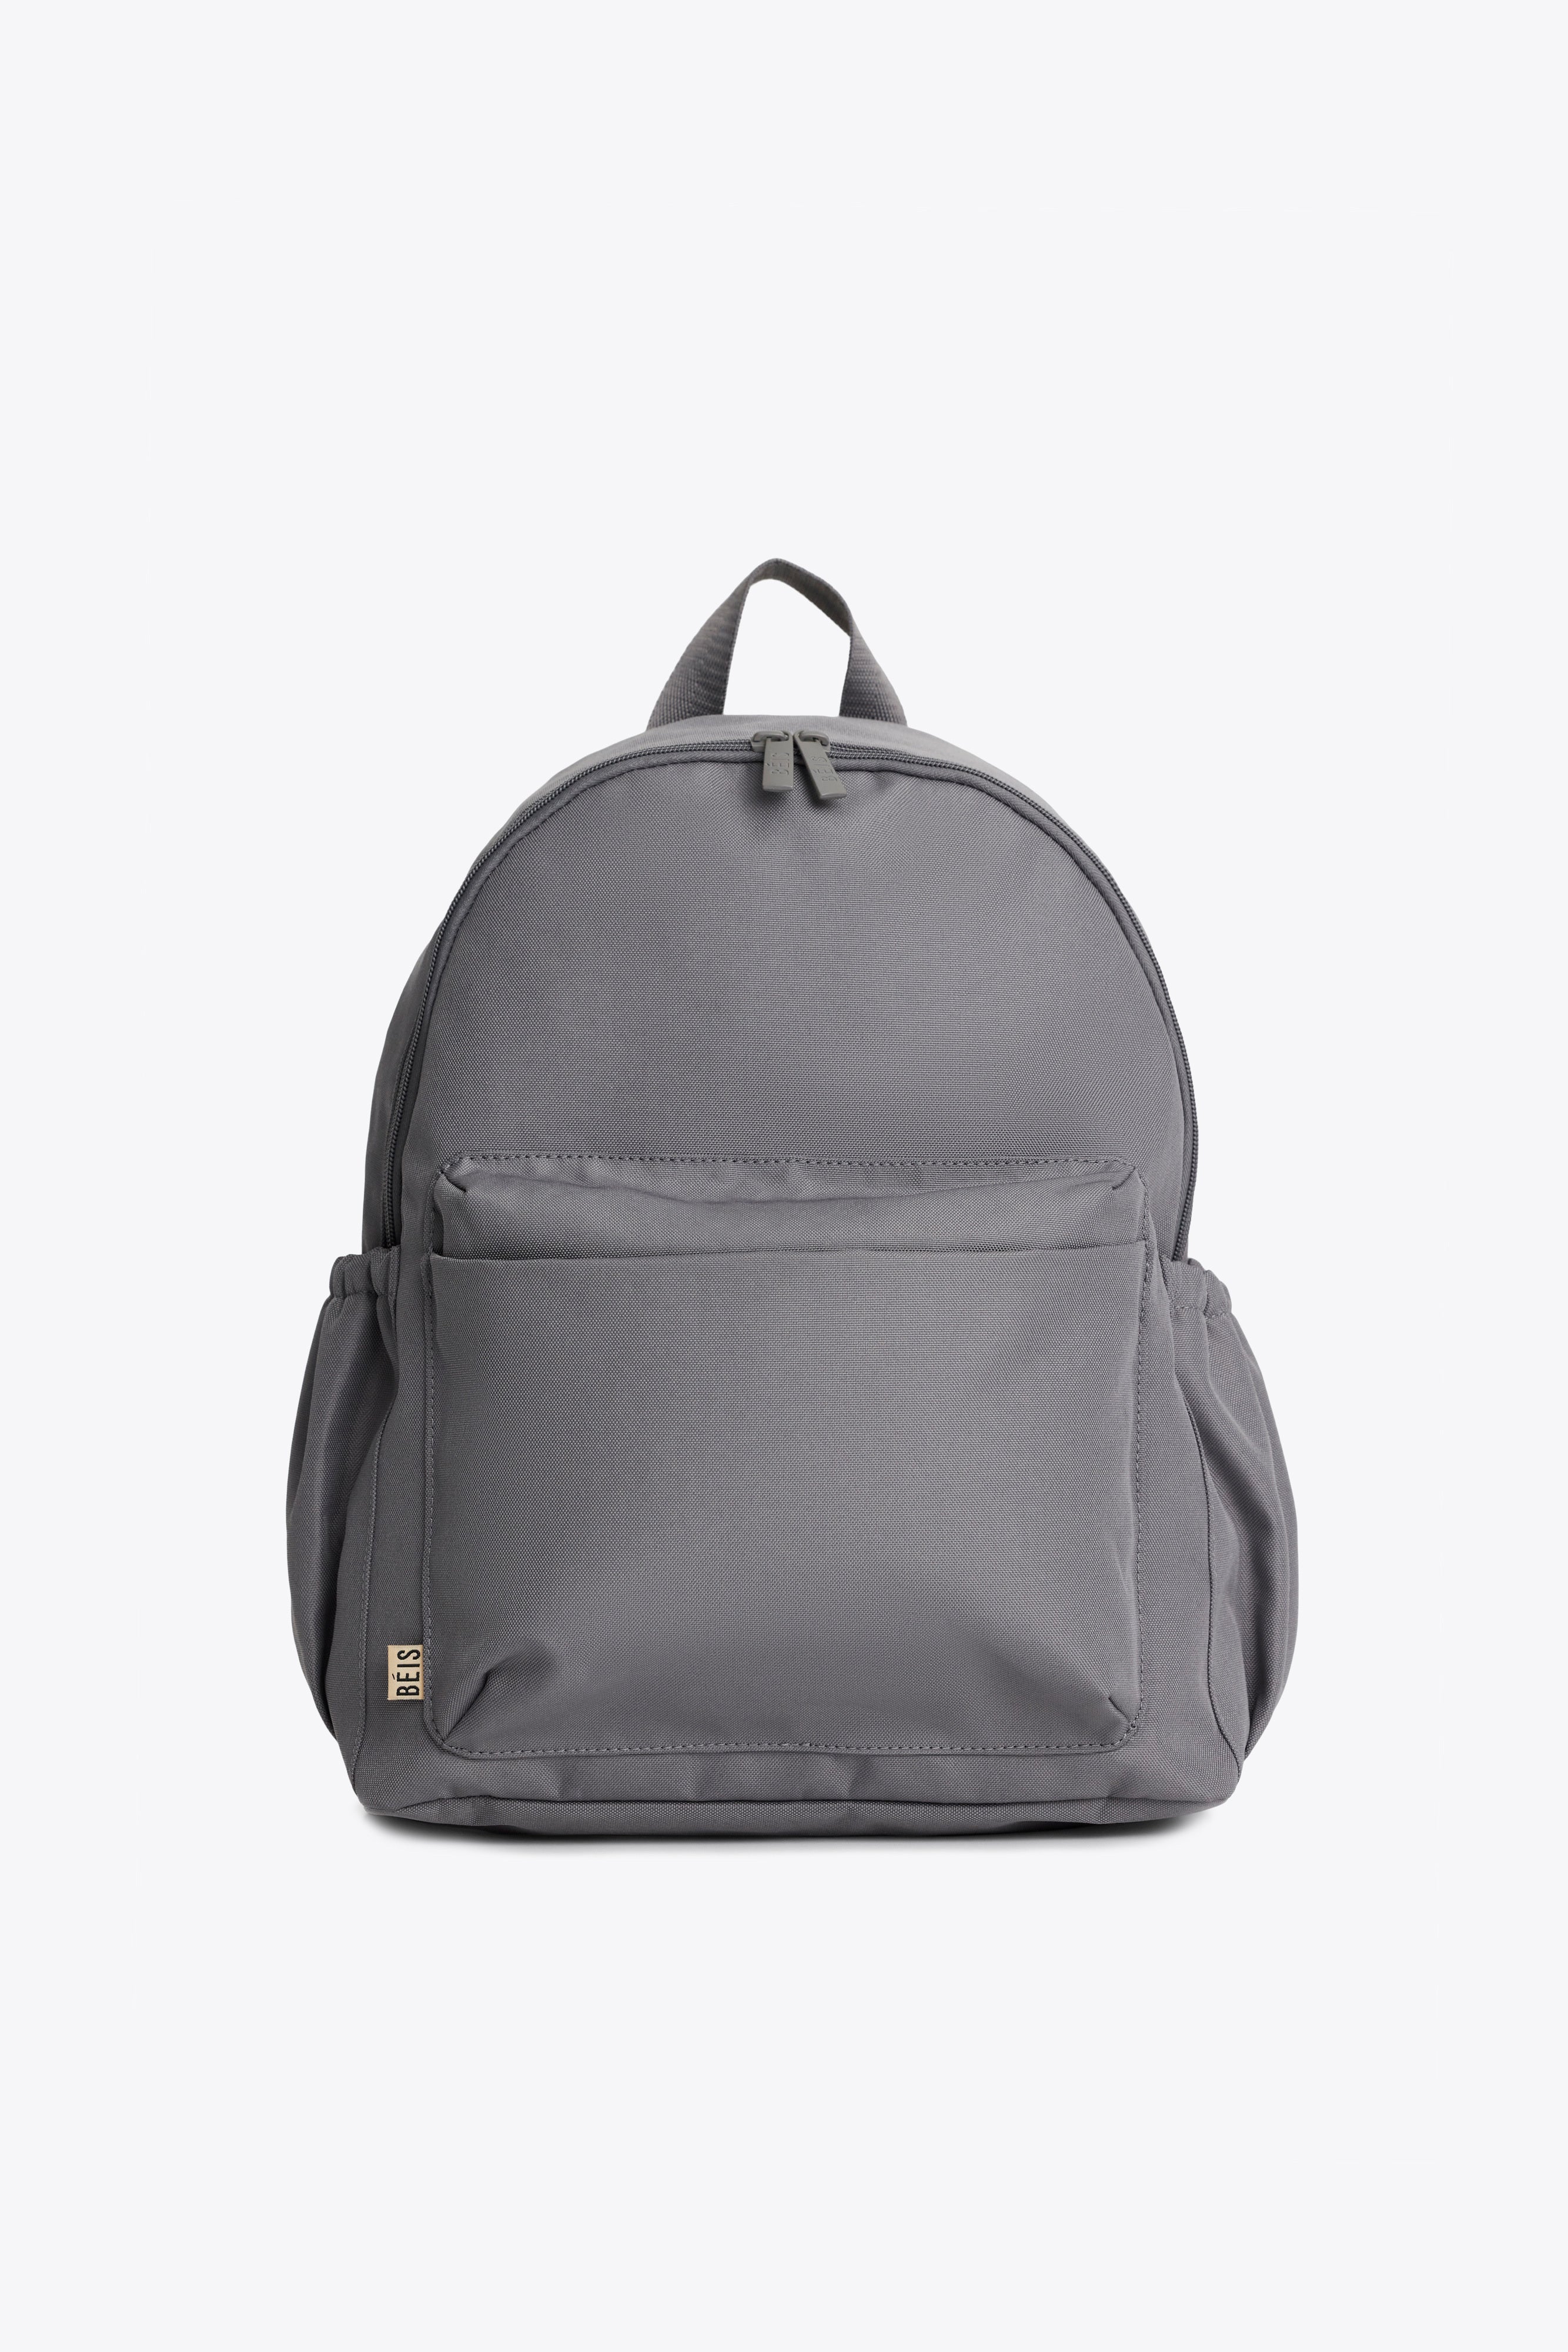 Backpacks - Fashionable Rucksacks, Knapsacks & Laptop 